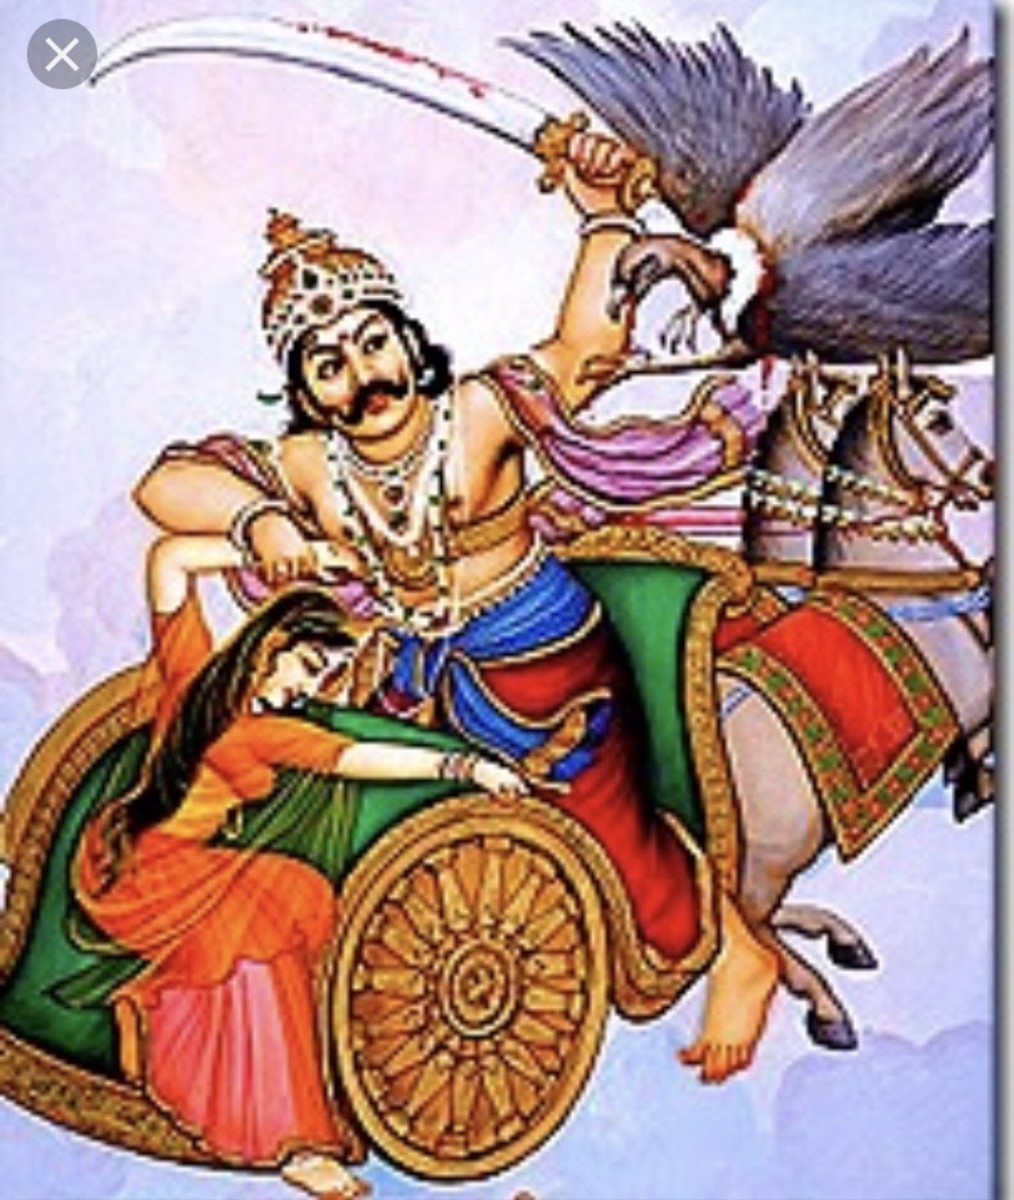 Raavan kidnapping Sita